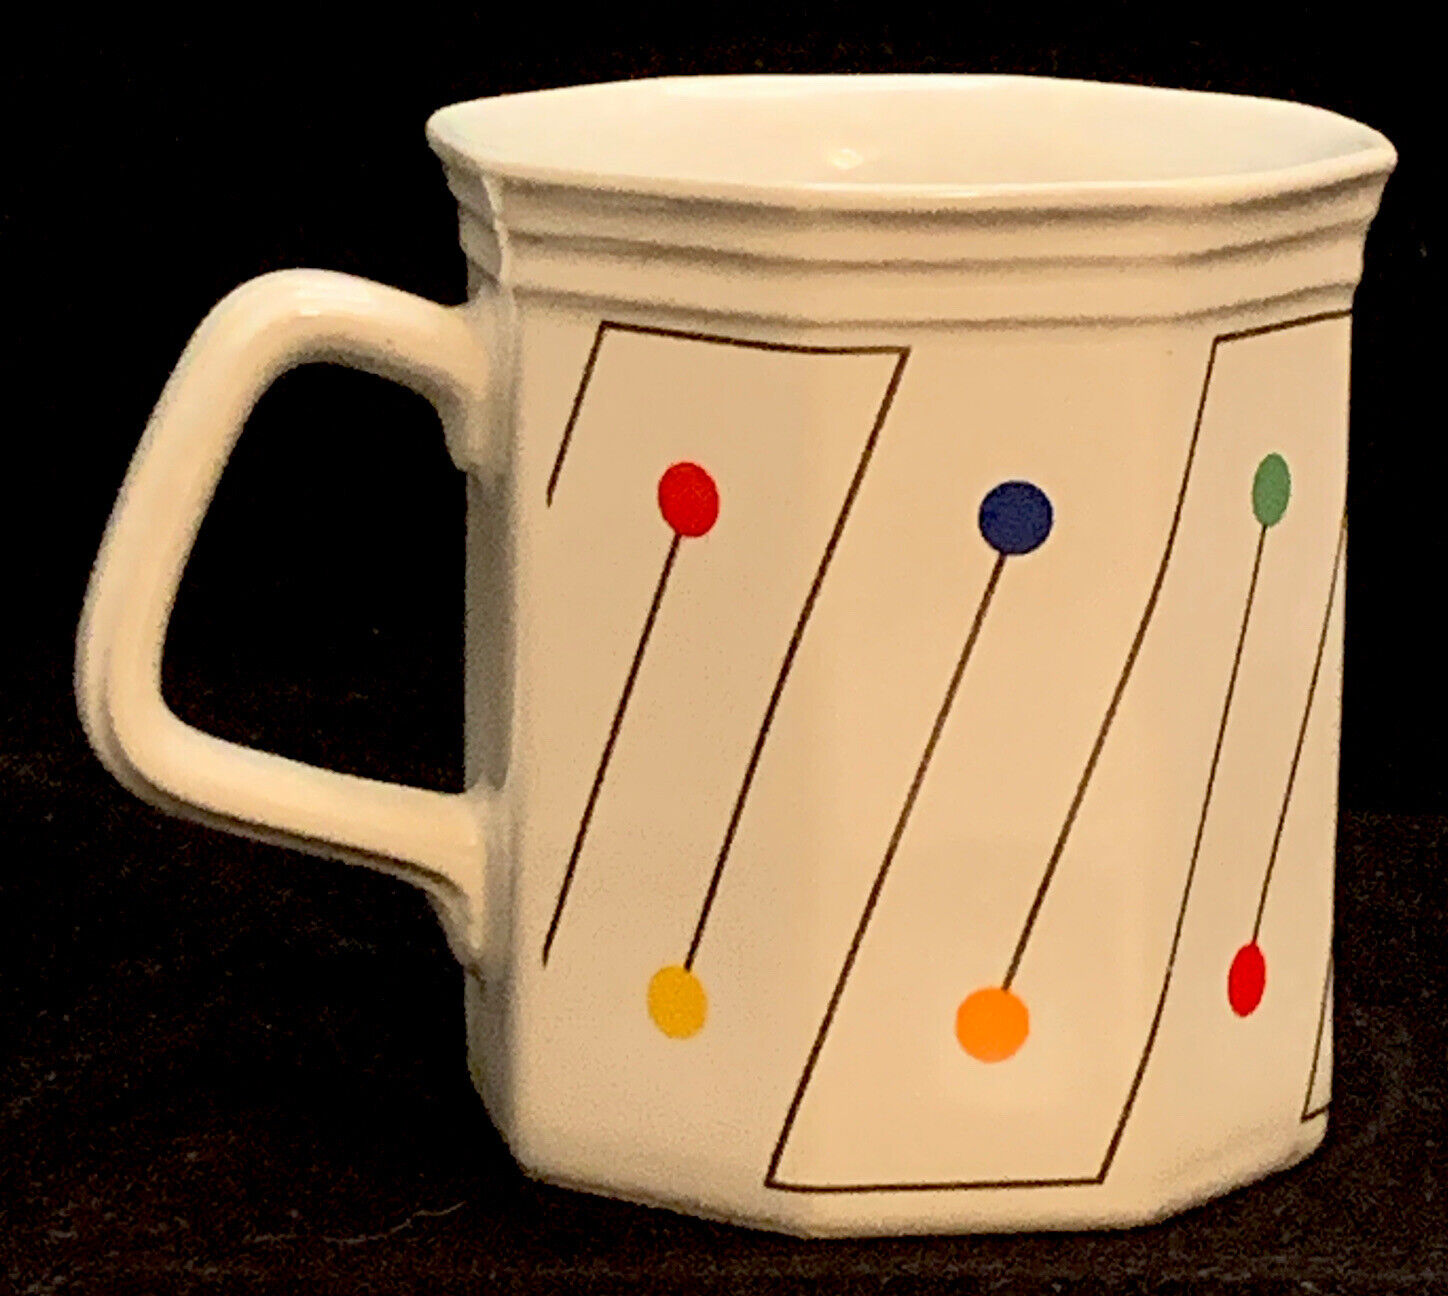 Vintage Polka Dot & Line Coffee Mug 3 5/8” tall made in Japan 8 sided shape